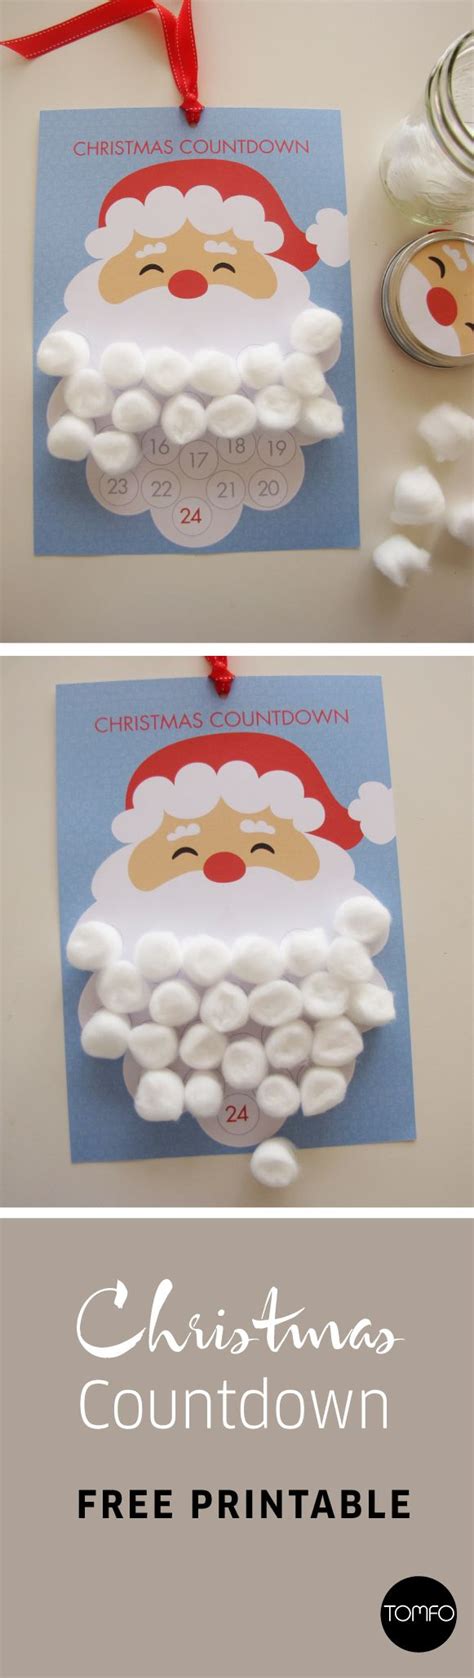 santa beard cotton ball countdown printable printable word searches